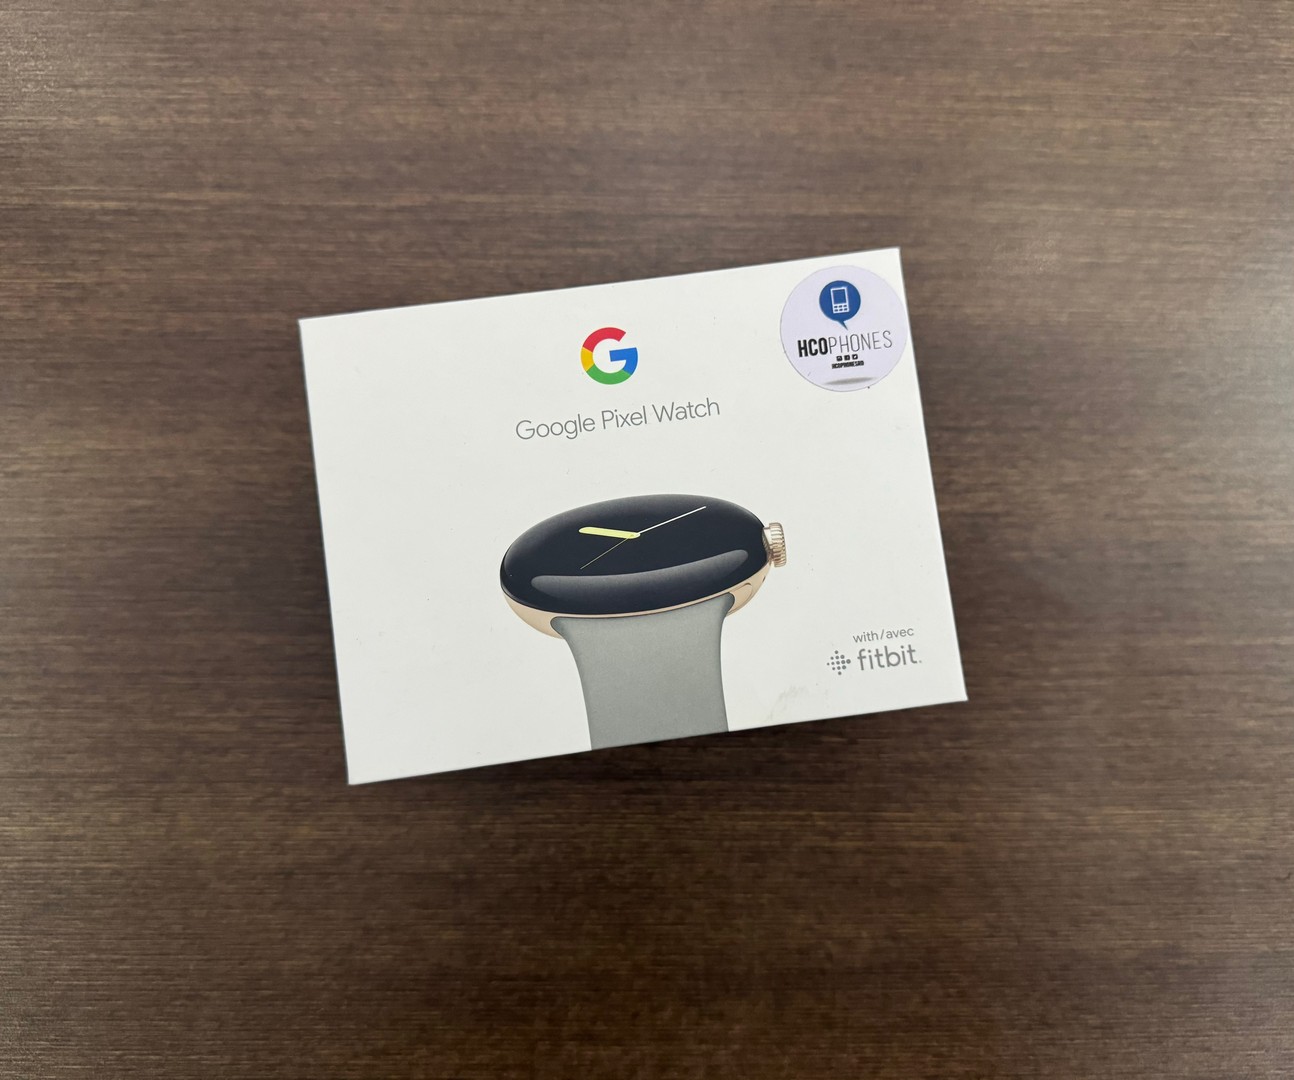 accesorios para electronica - Reloj Google Pixel Watch Nuevo, Garantia, RD$ 10,250 NEG 0